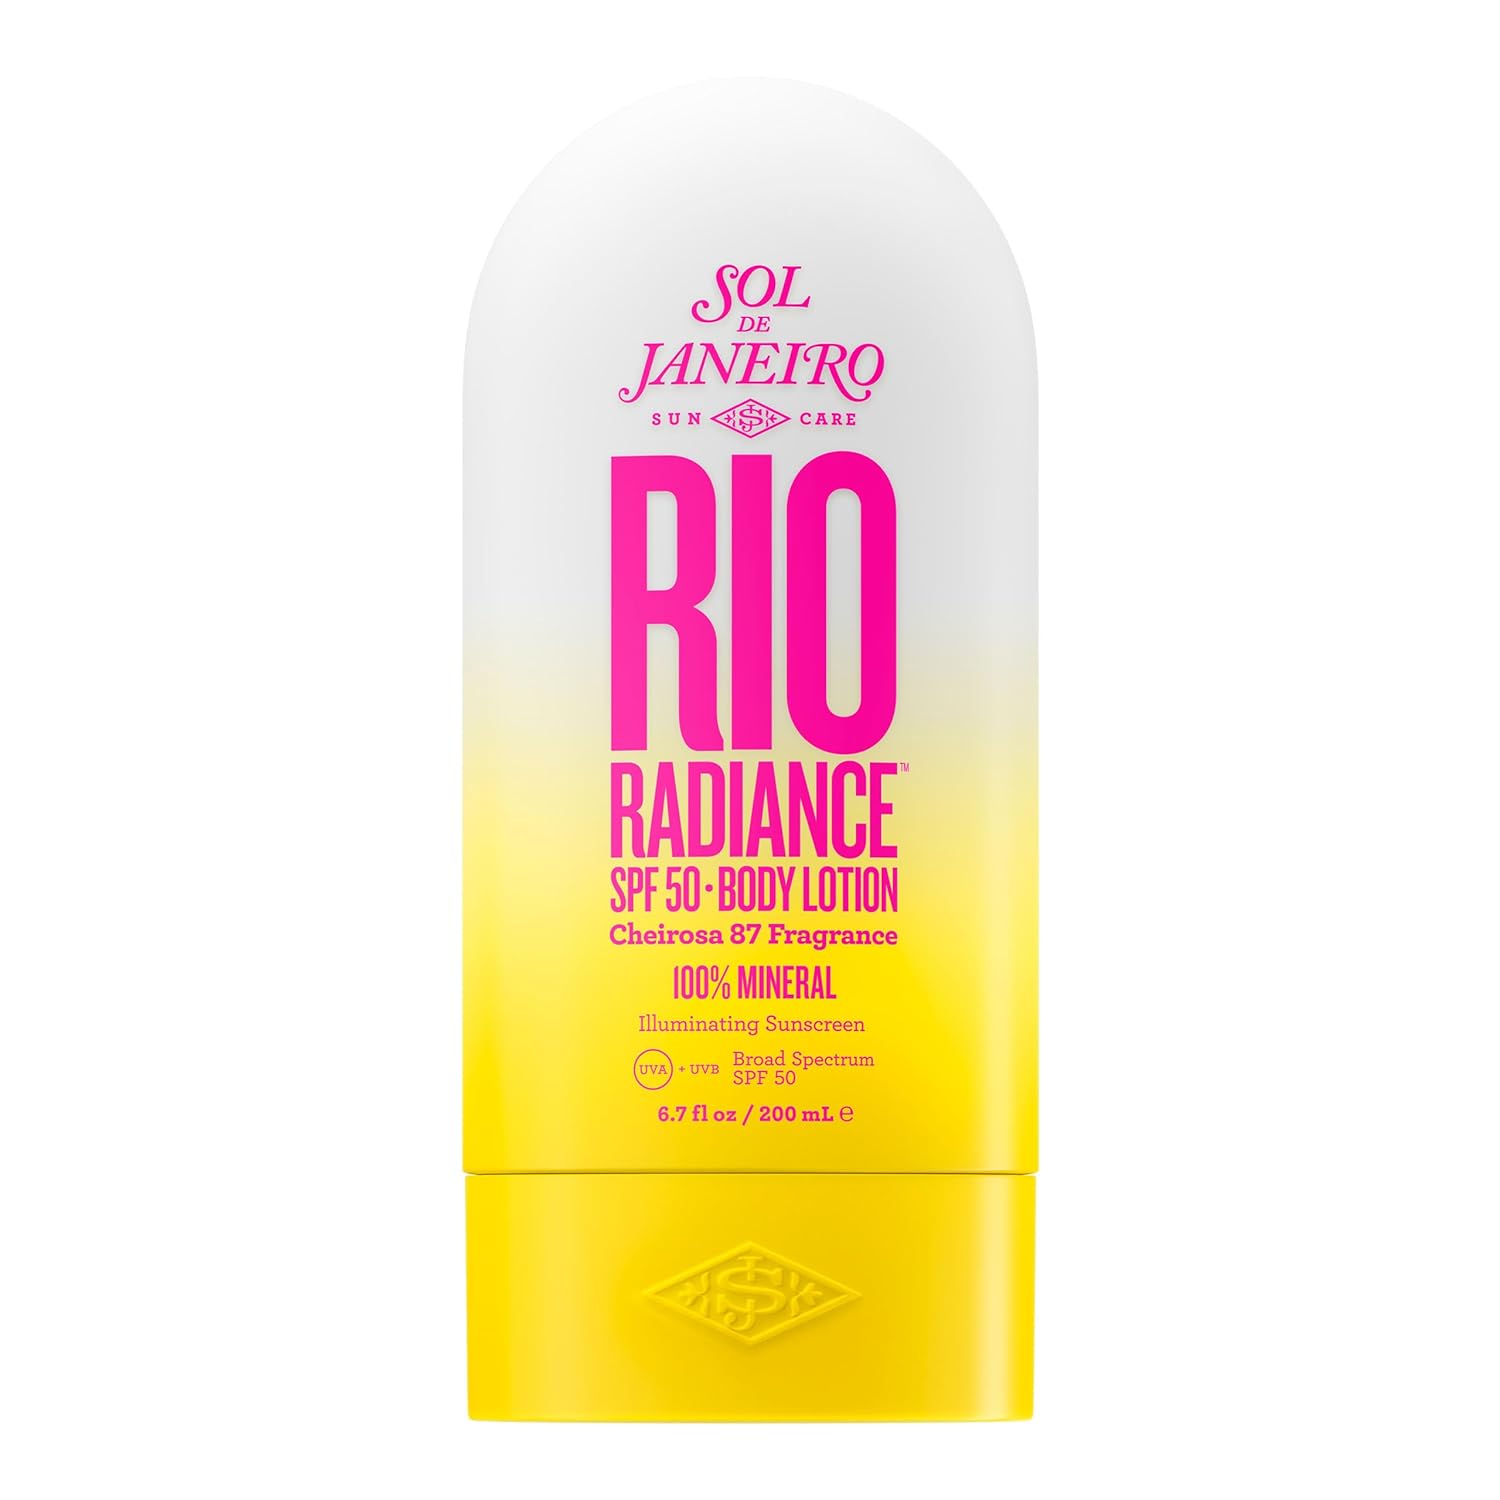 Sol de Janeiro Rio Radiance Body Lotion 100% Mineral UVA/UVB Broad Spectrum SPF 50